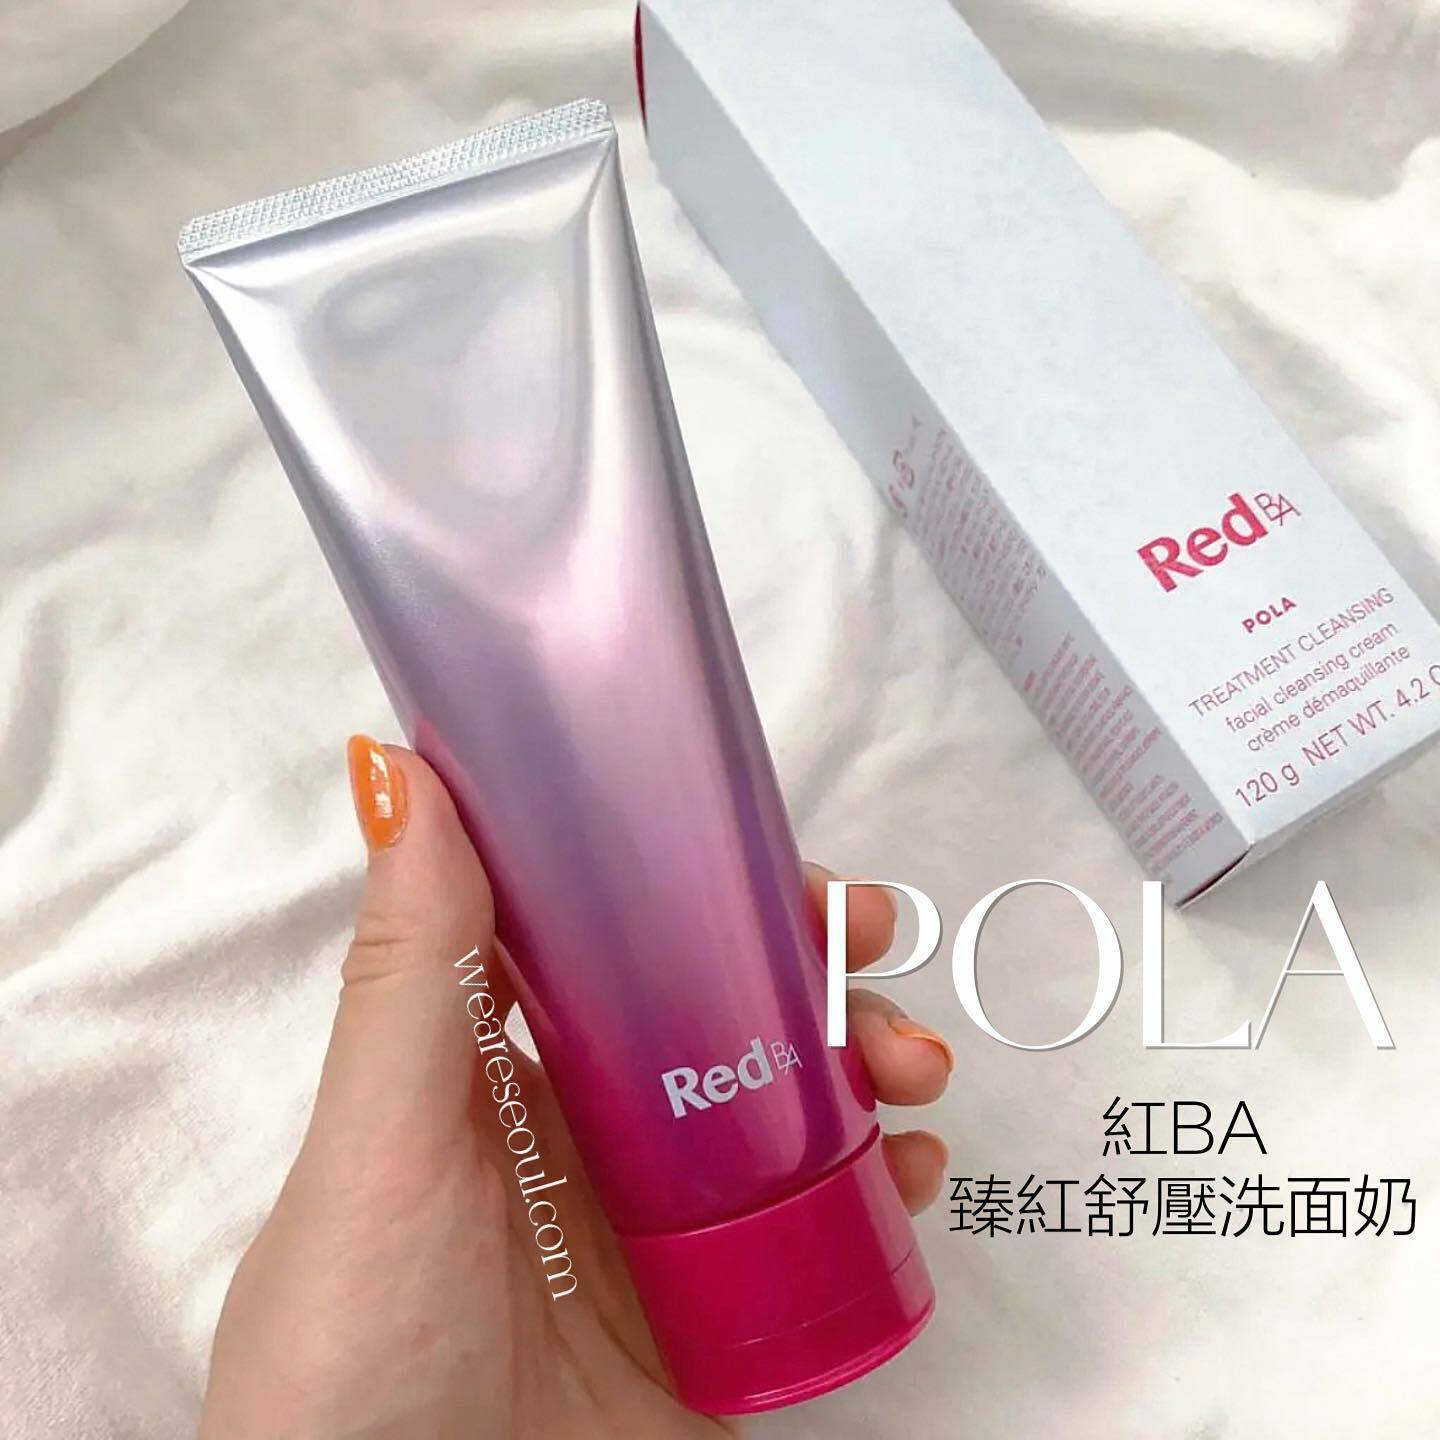 POLA red BA 臻紅抗壓抗糖洗面奶120g weareseoul.com